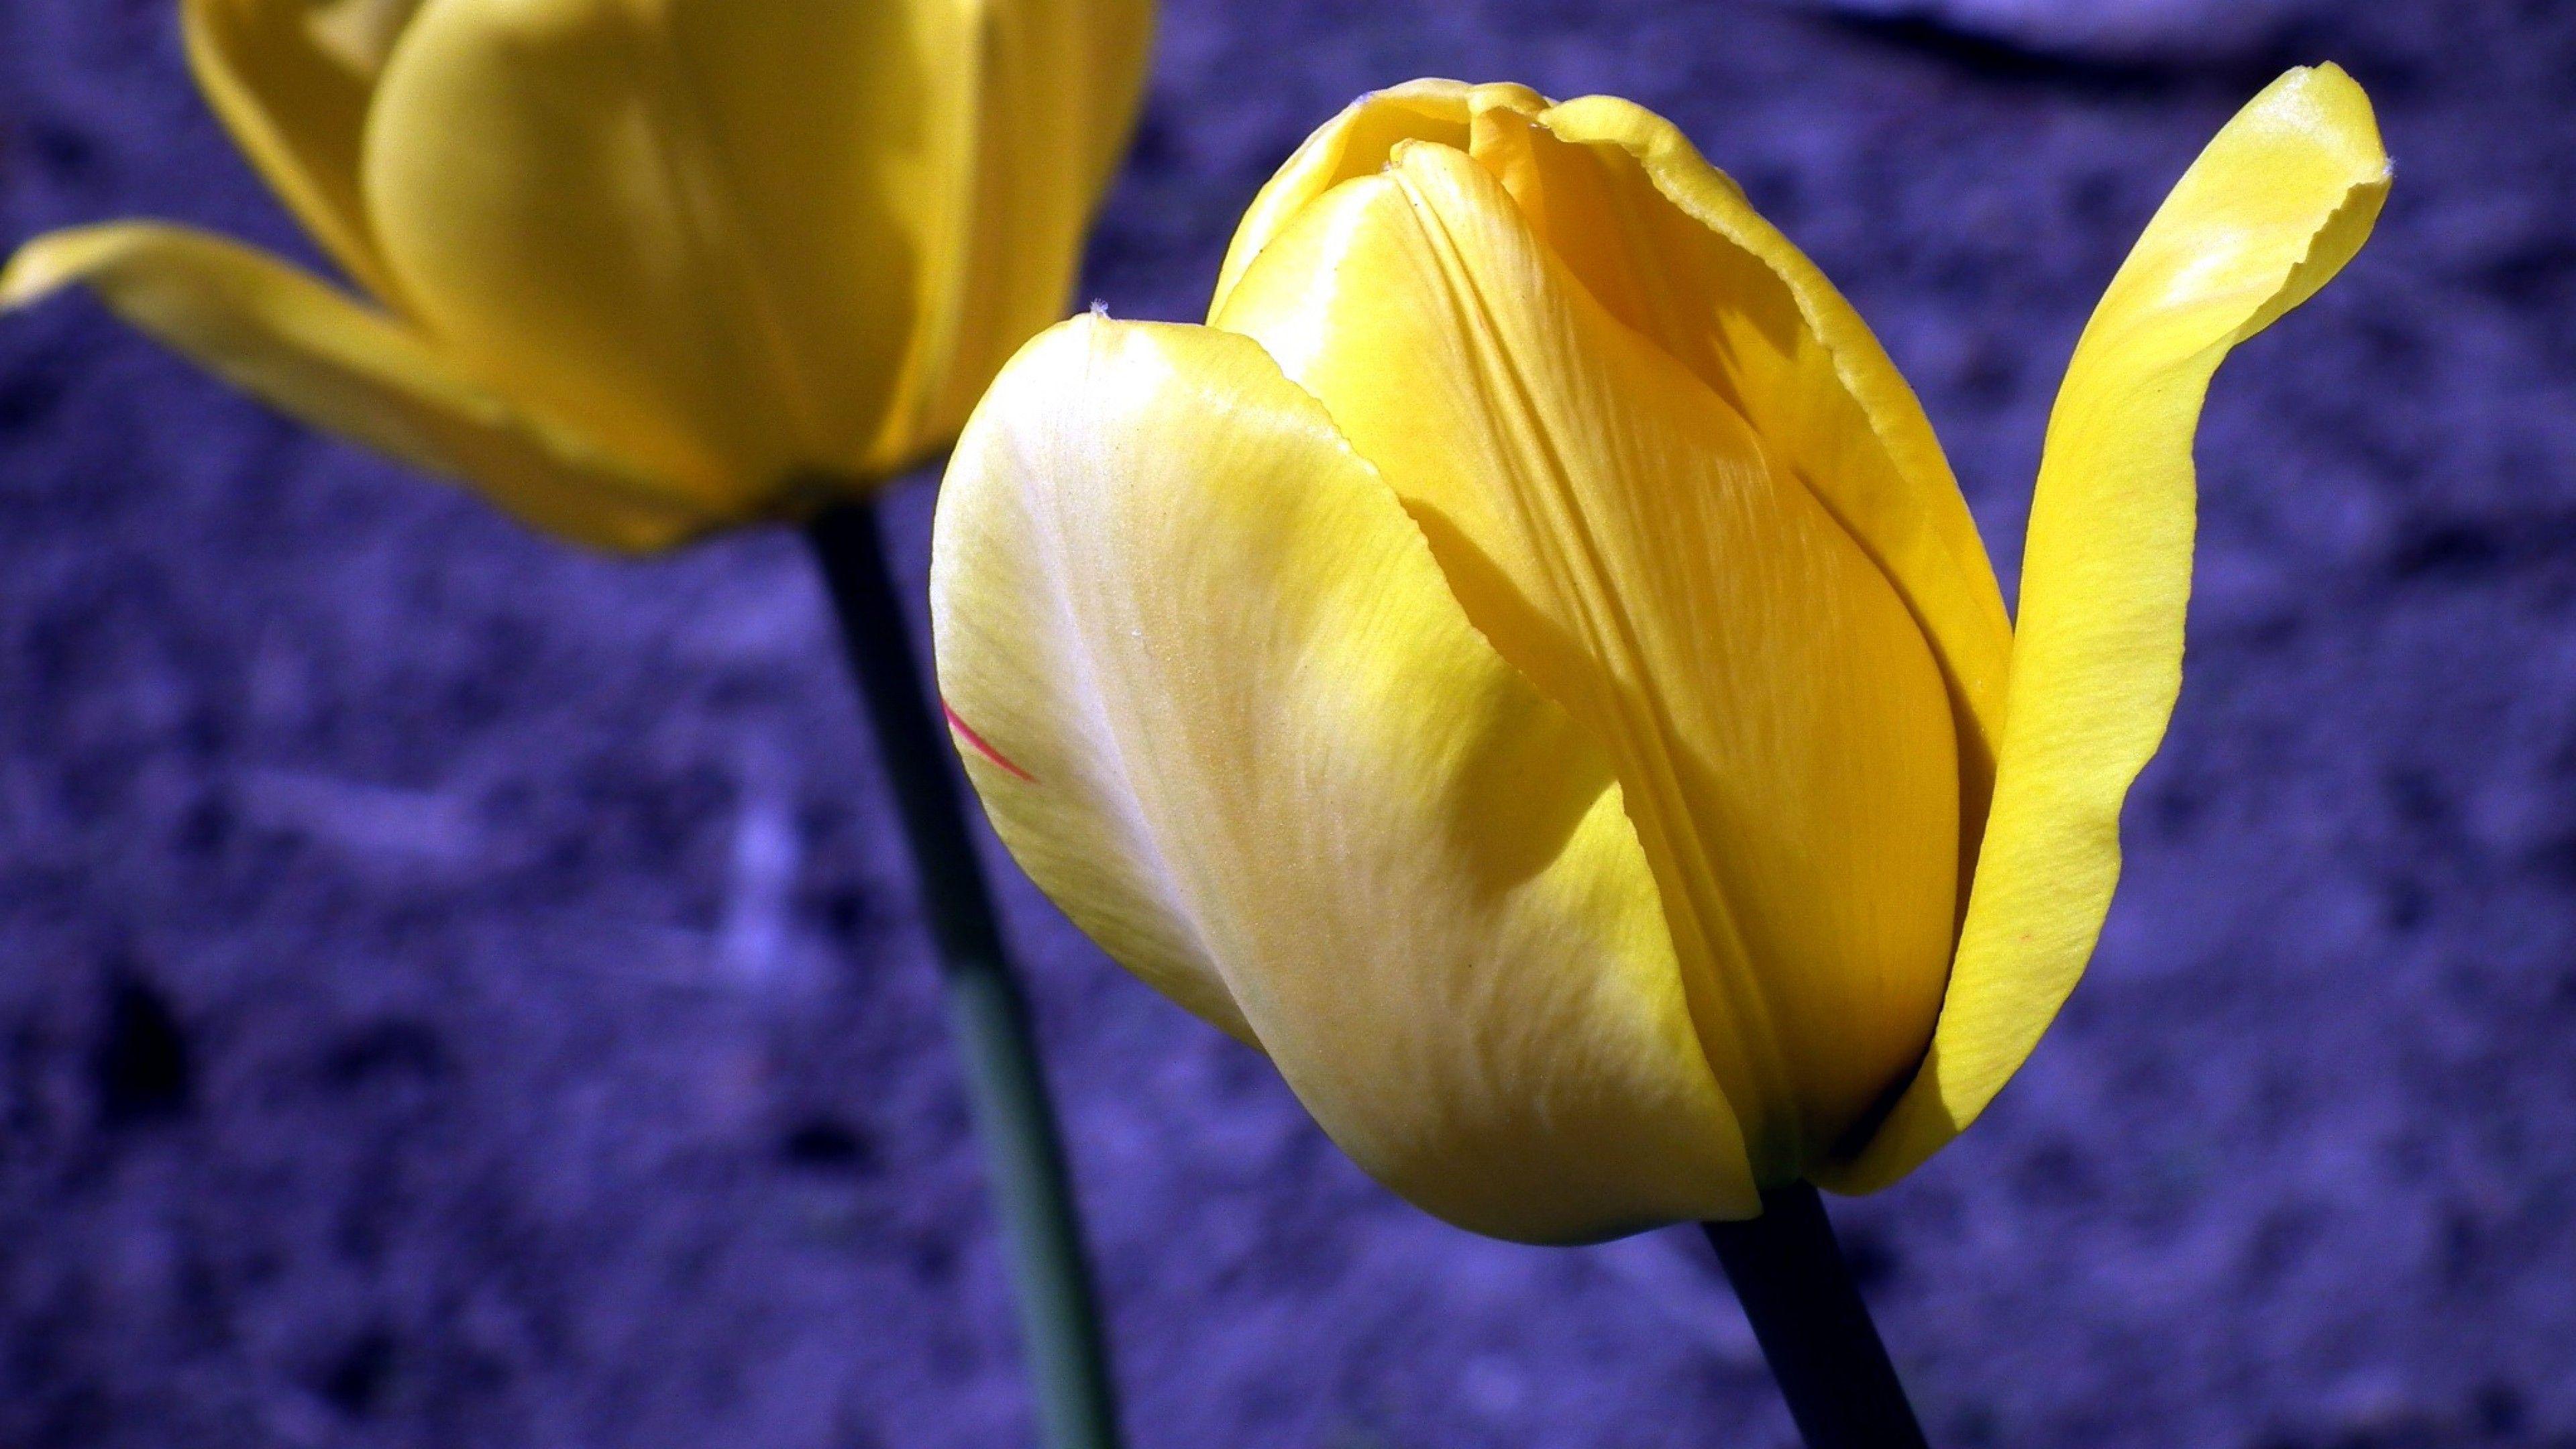 Tulip Flowers Buds, HD Flowers, 4k Wallpaper, Image, Background